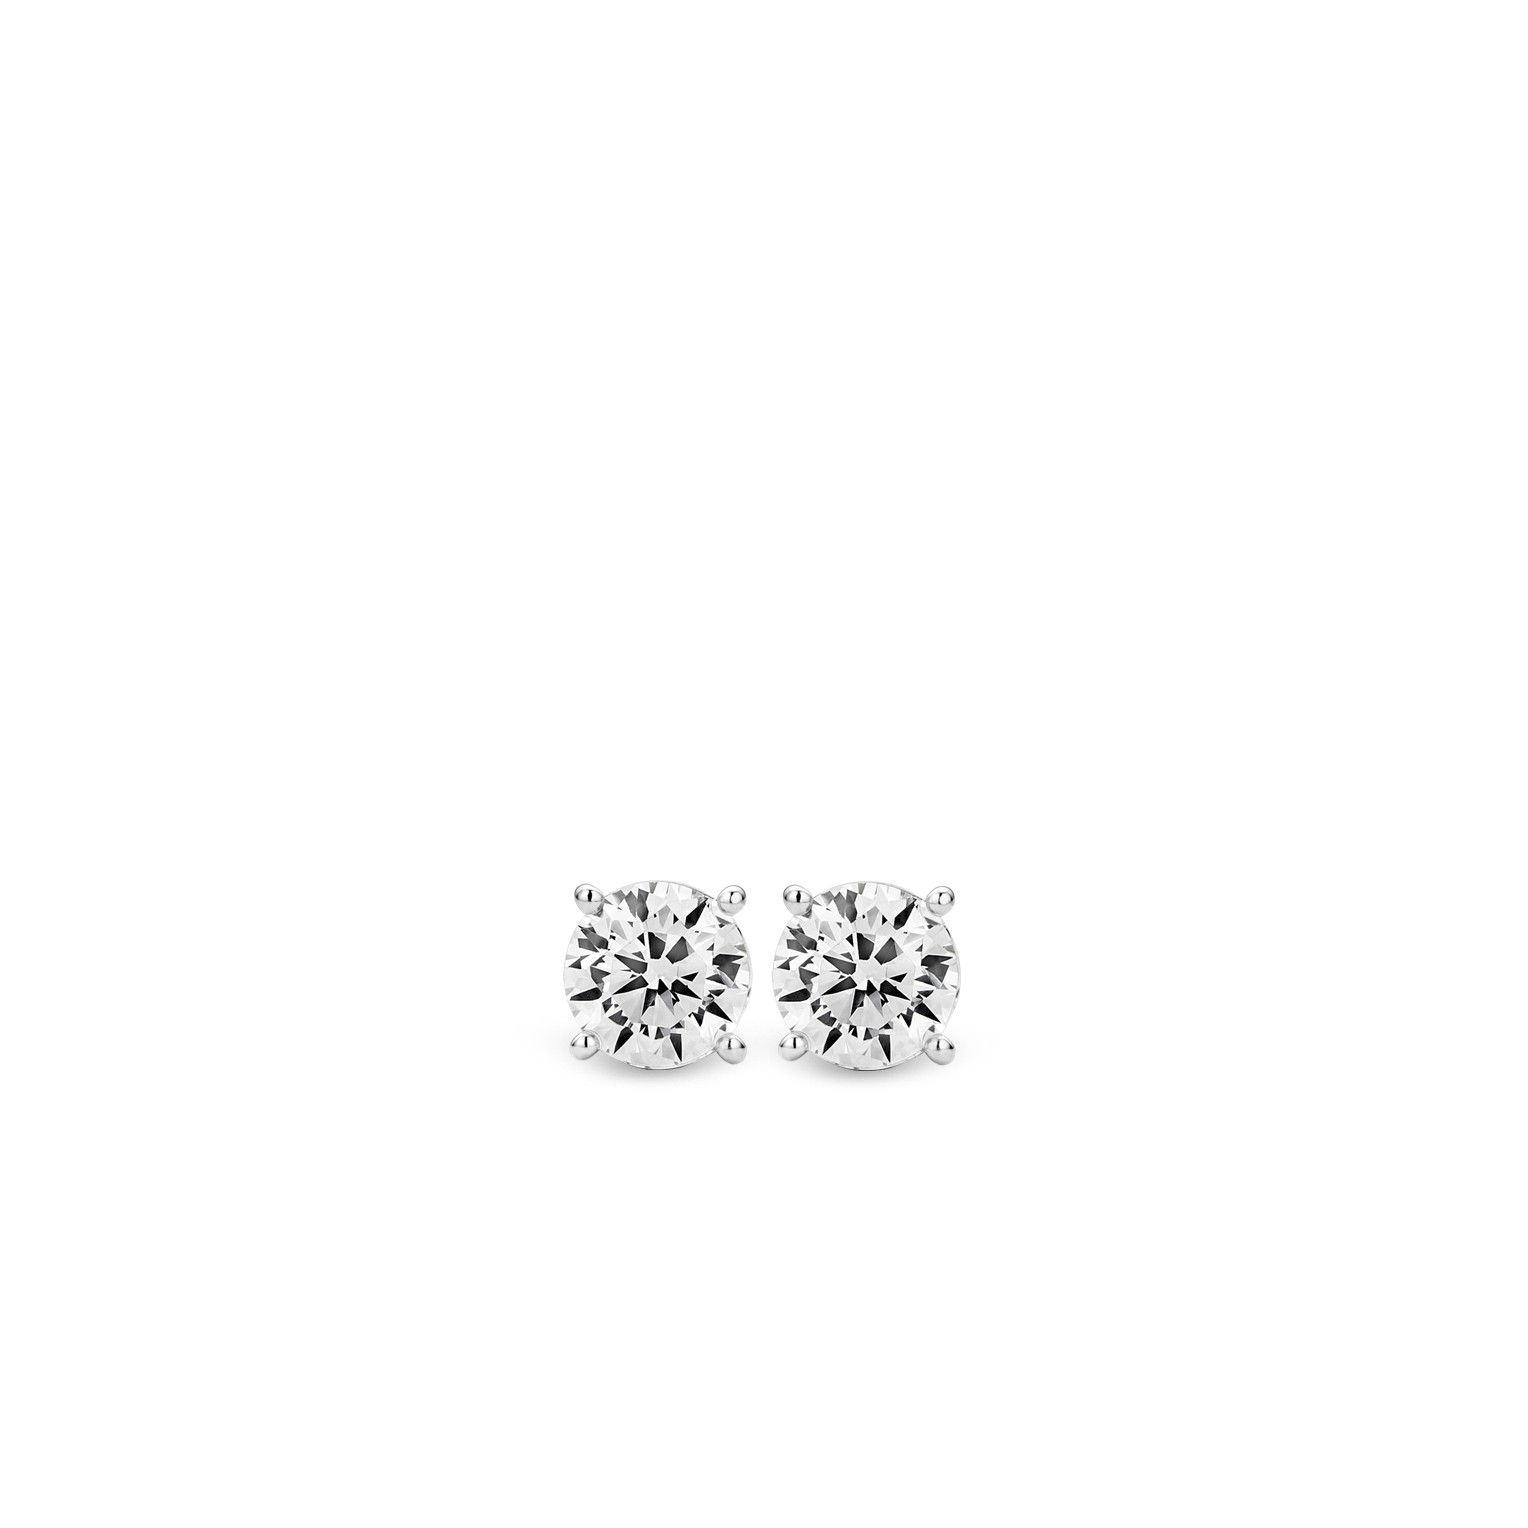 TI SENTO - Milano Earrings 7321ZI Image 2 Trinity Jewelers  Pittsburgh, PA